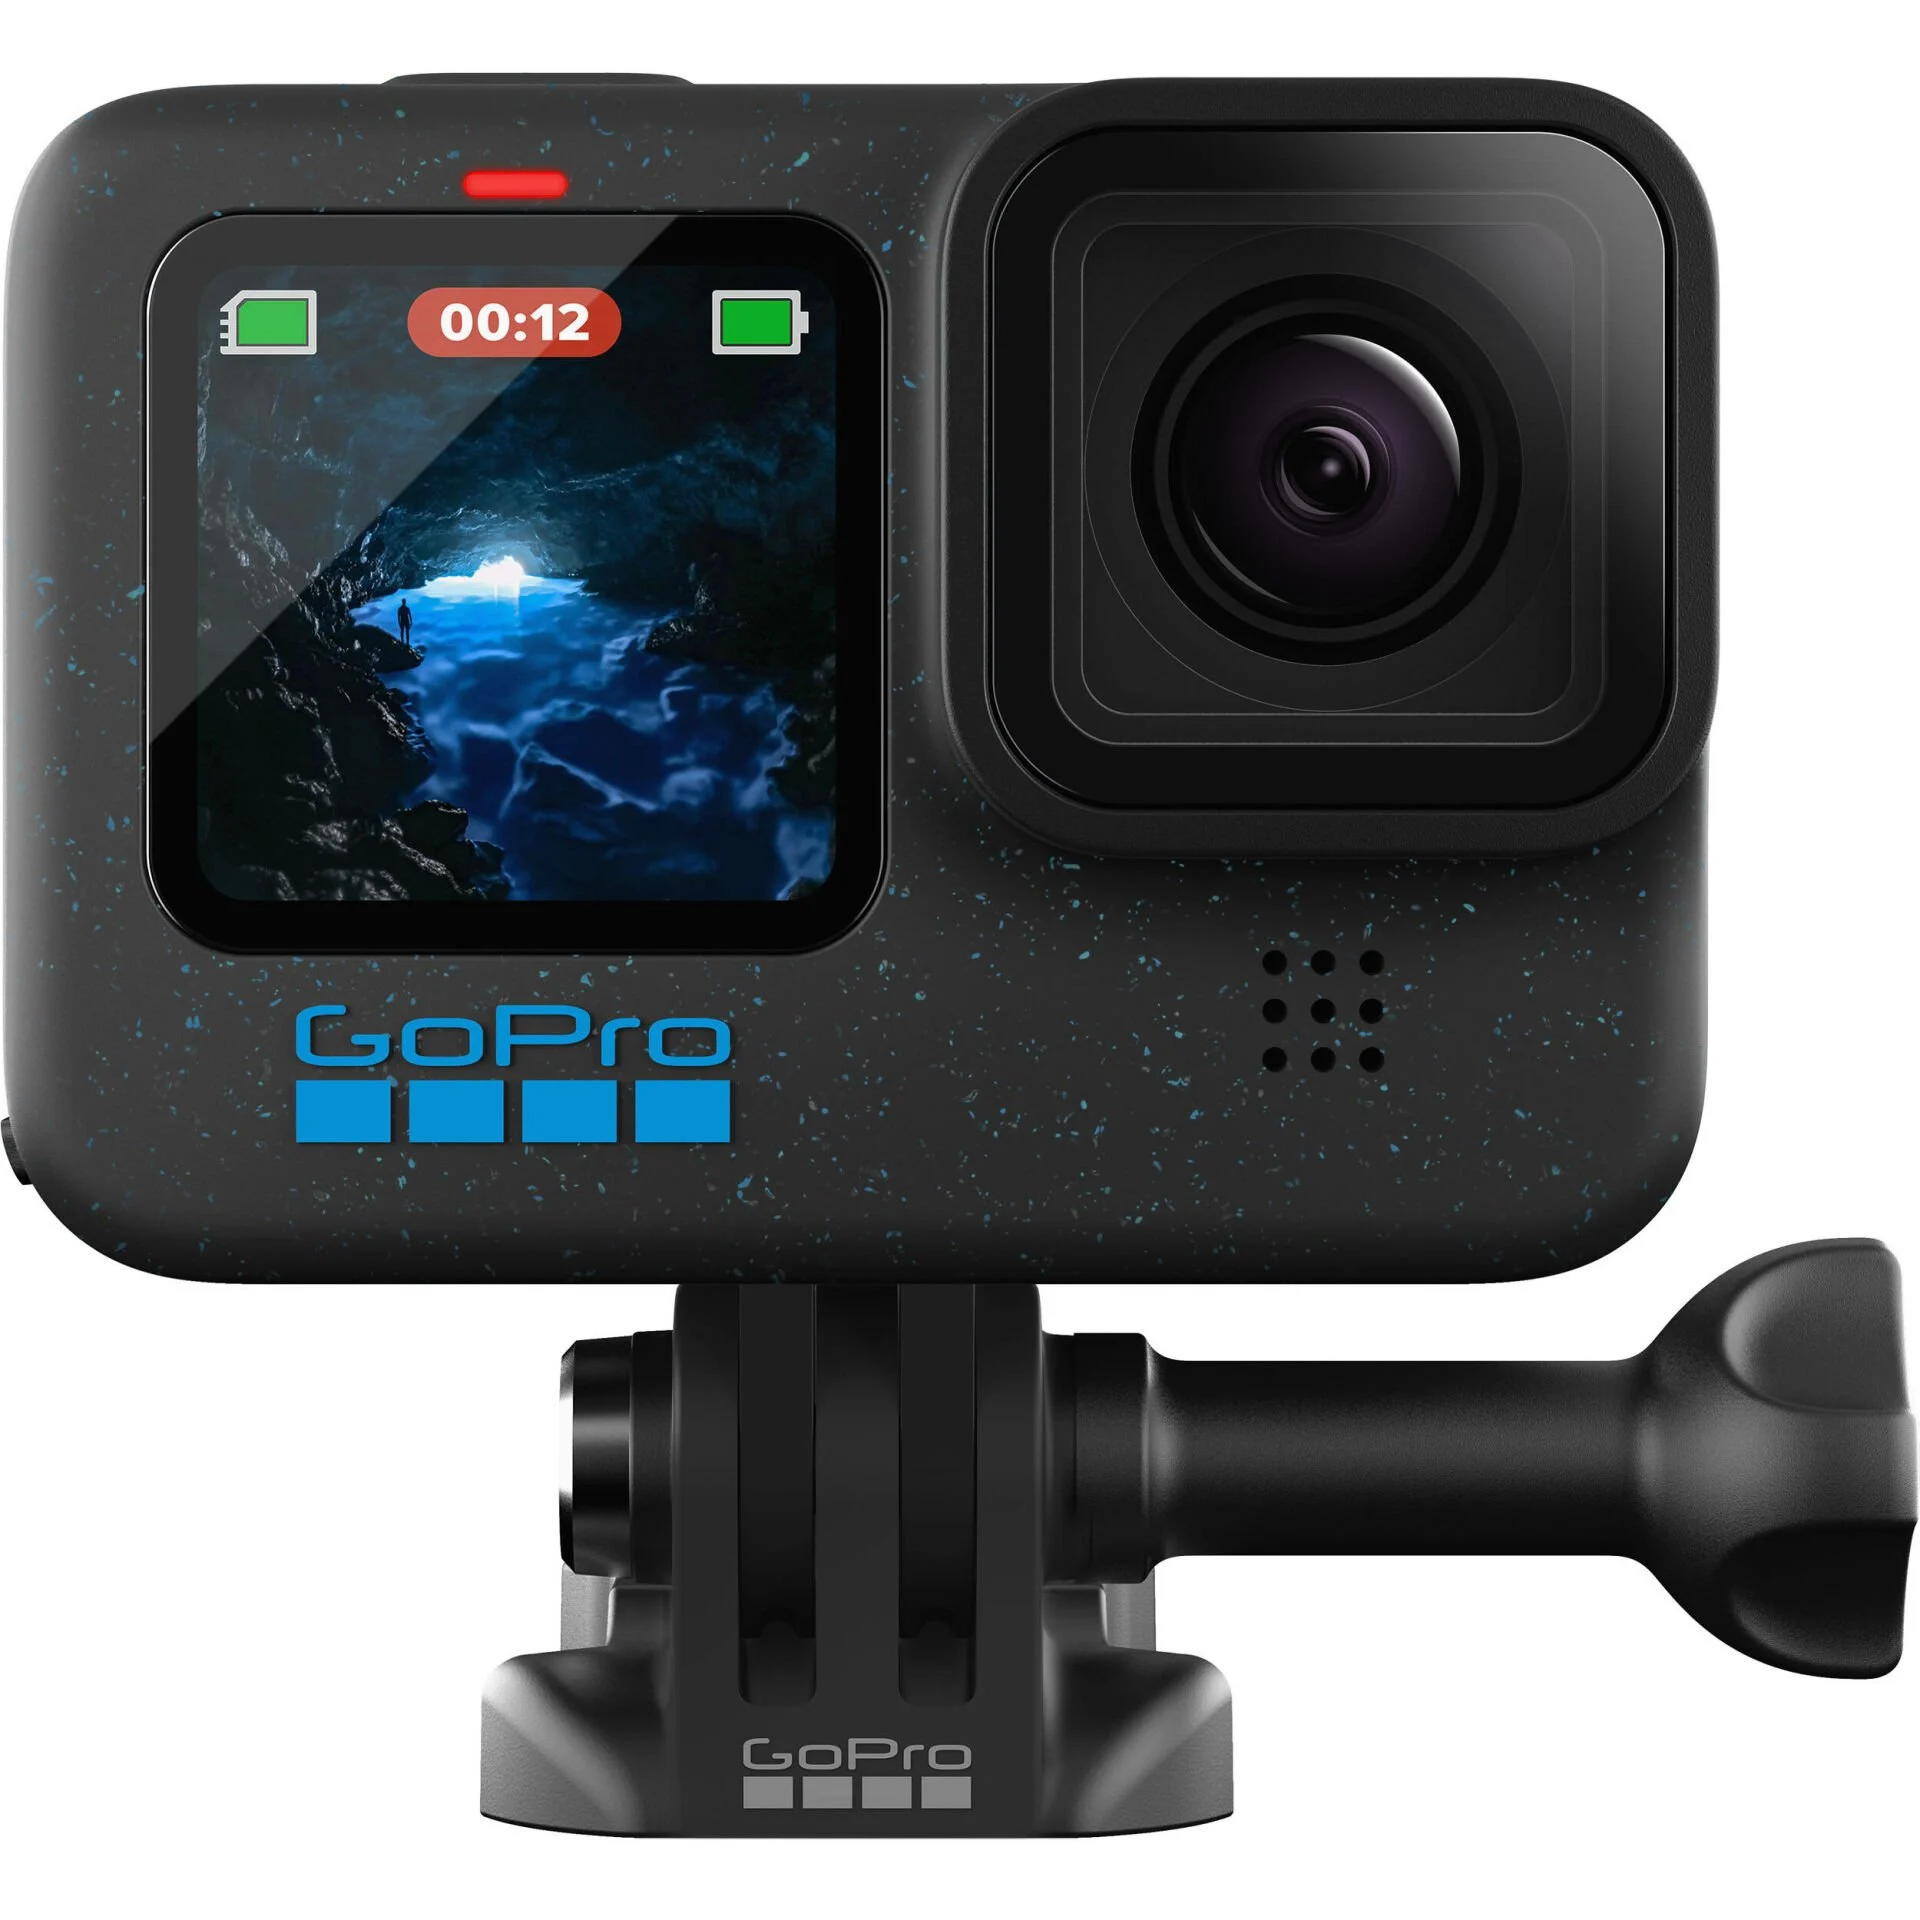 Kiralık GoPro HERO 12 Kamera